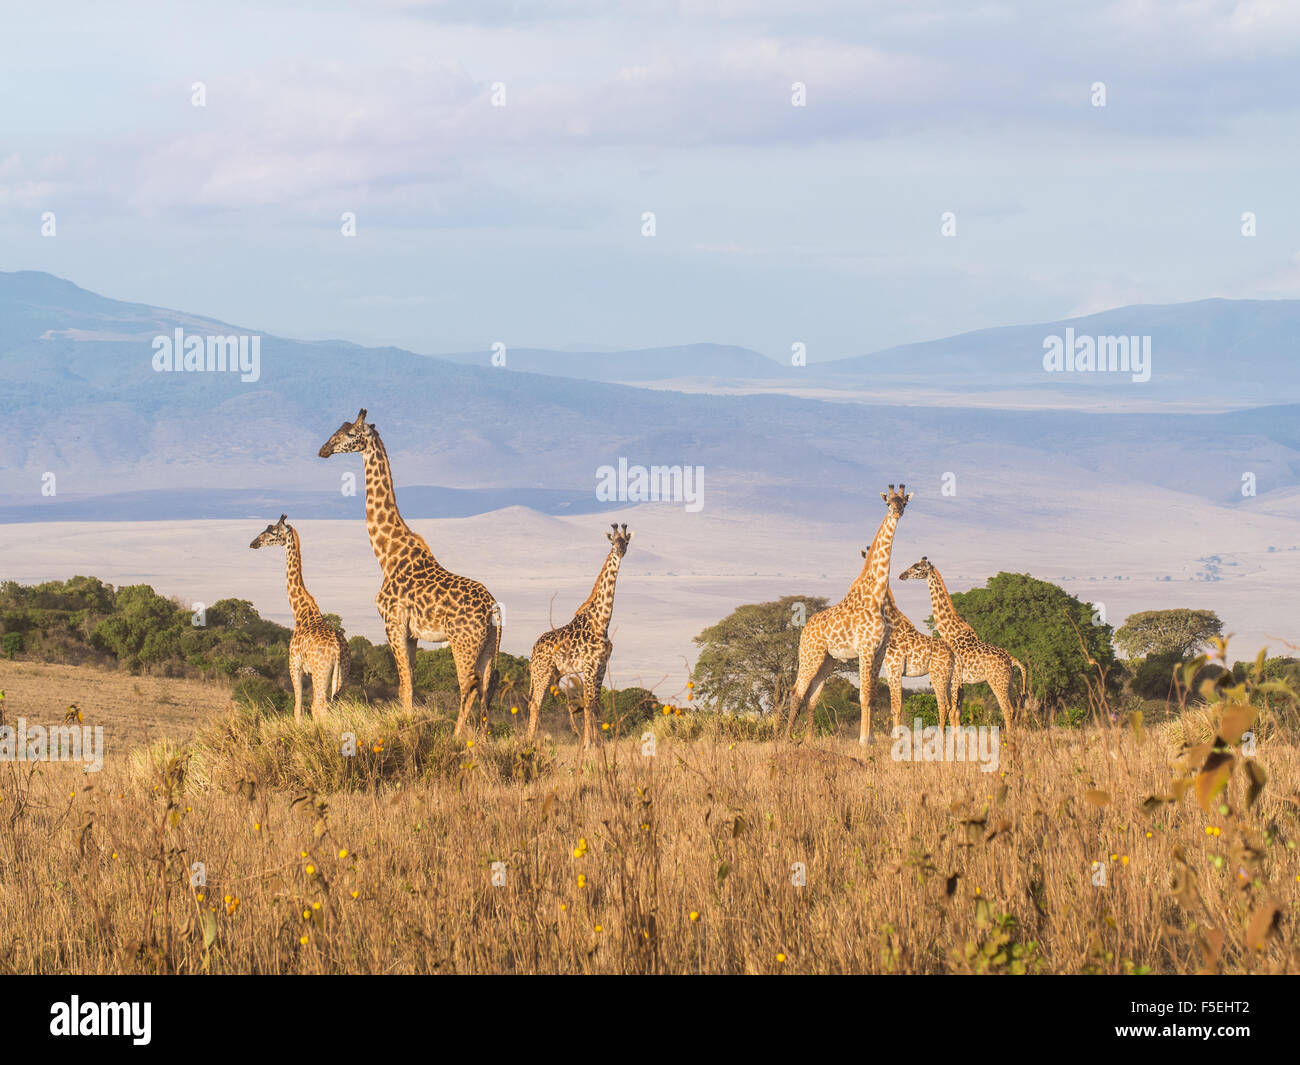 Herd of giraffes on the rim of the Ngorongoro Crater in Tanzania, Africa, at sunset. Stock Photo